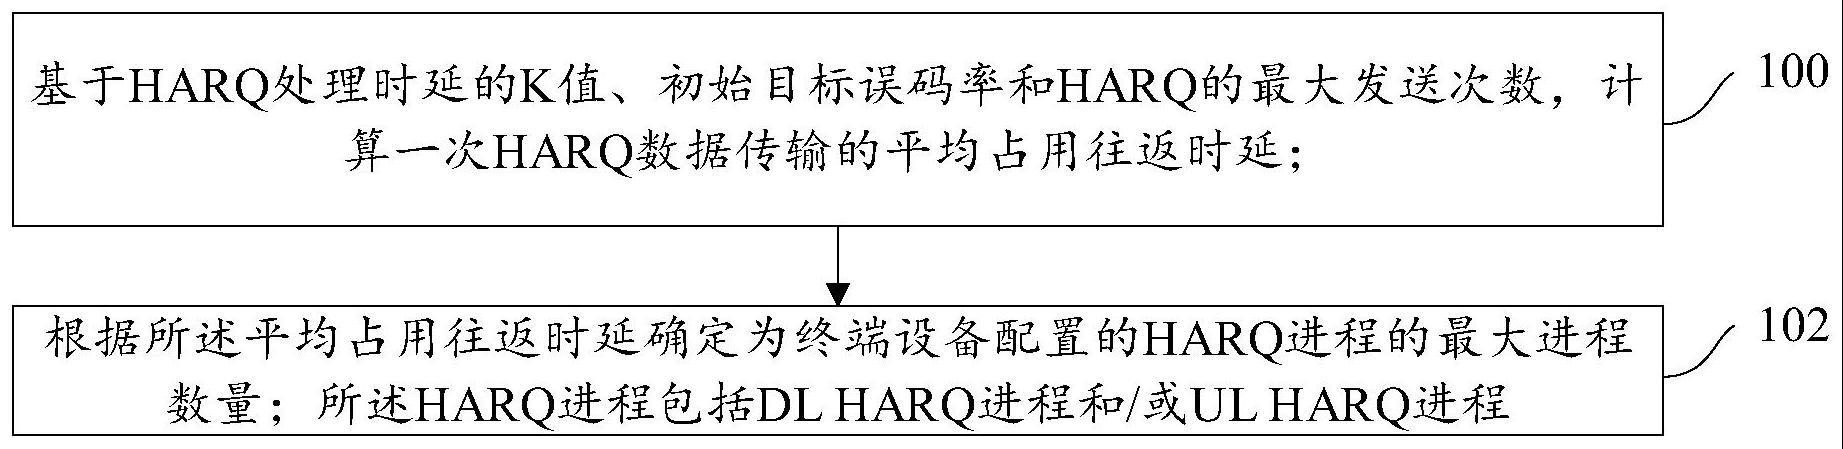 NTN中HARQ的进程数量确定方法及装置与流程